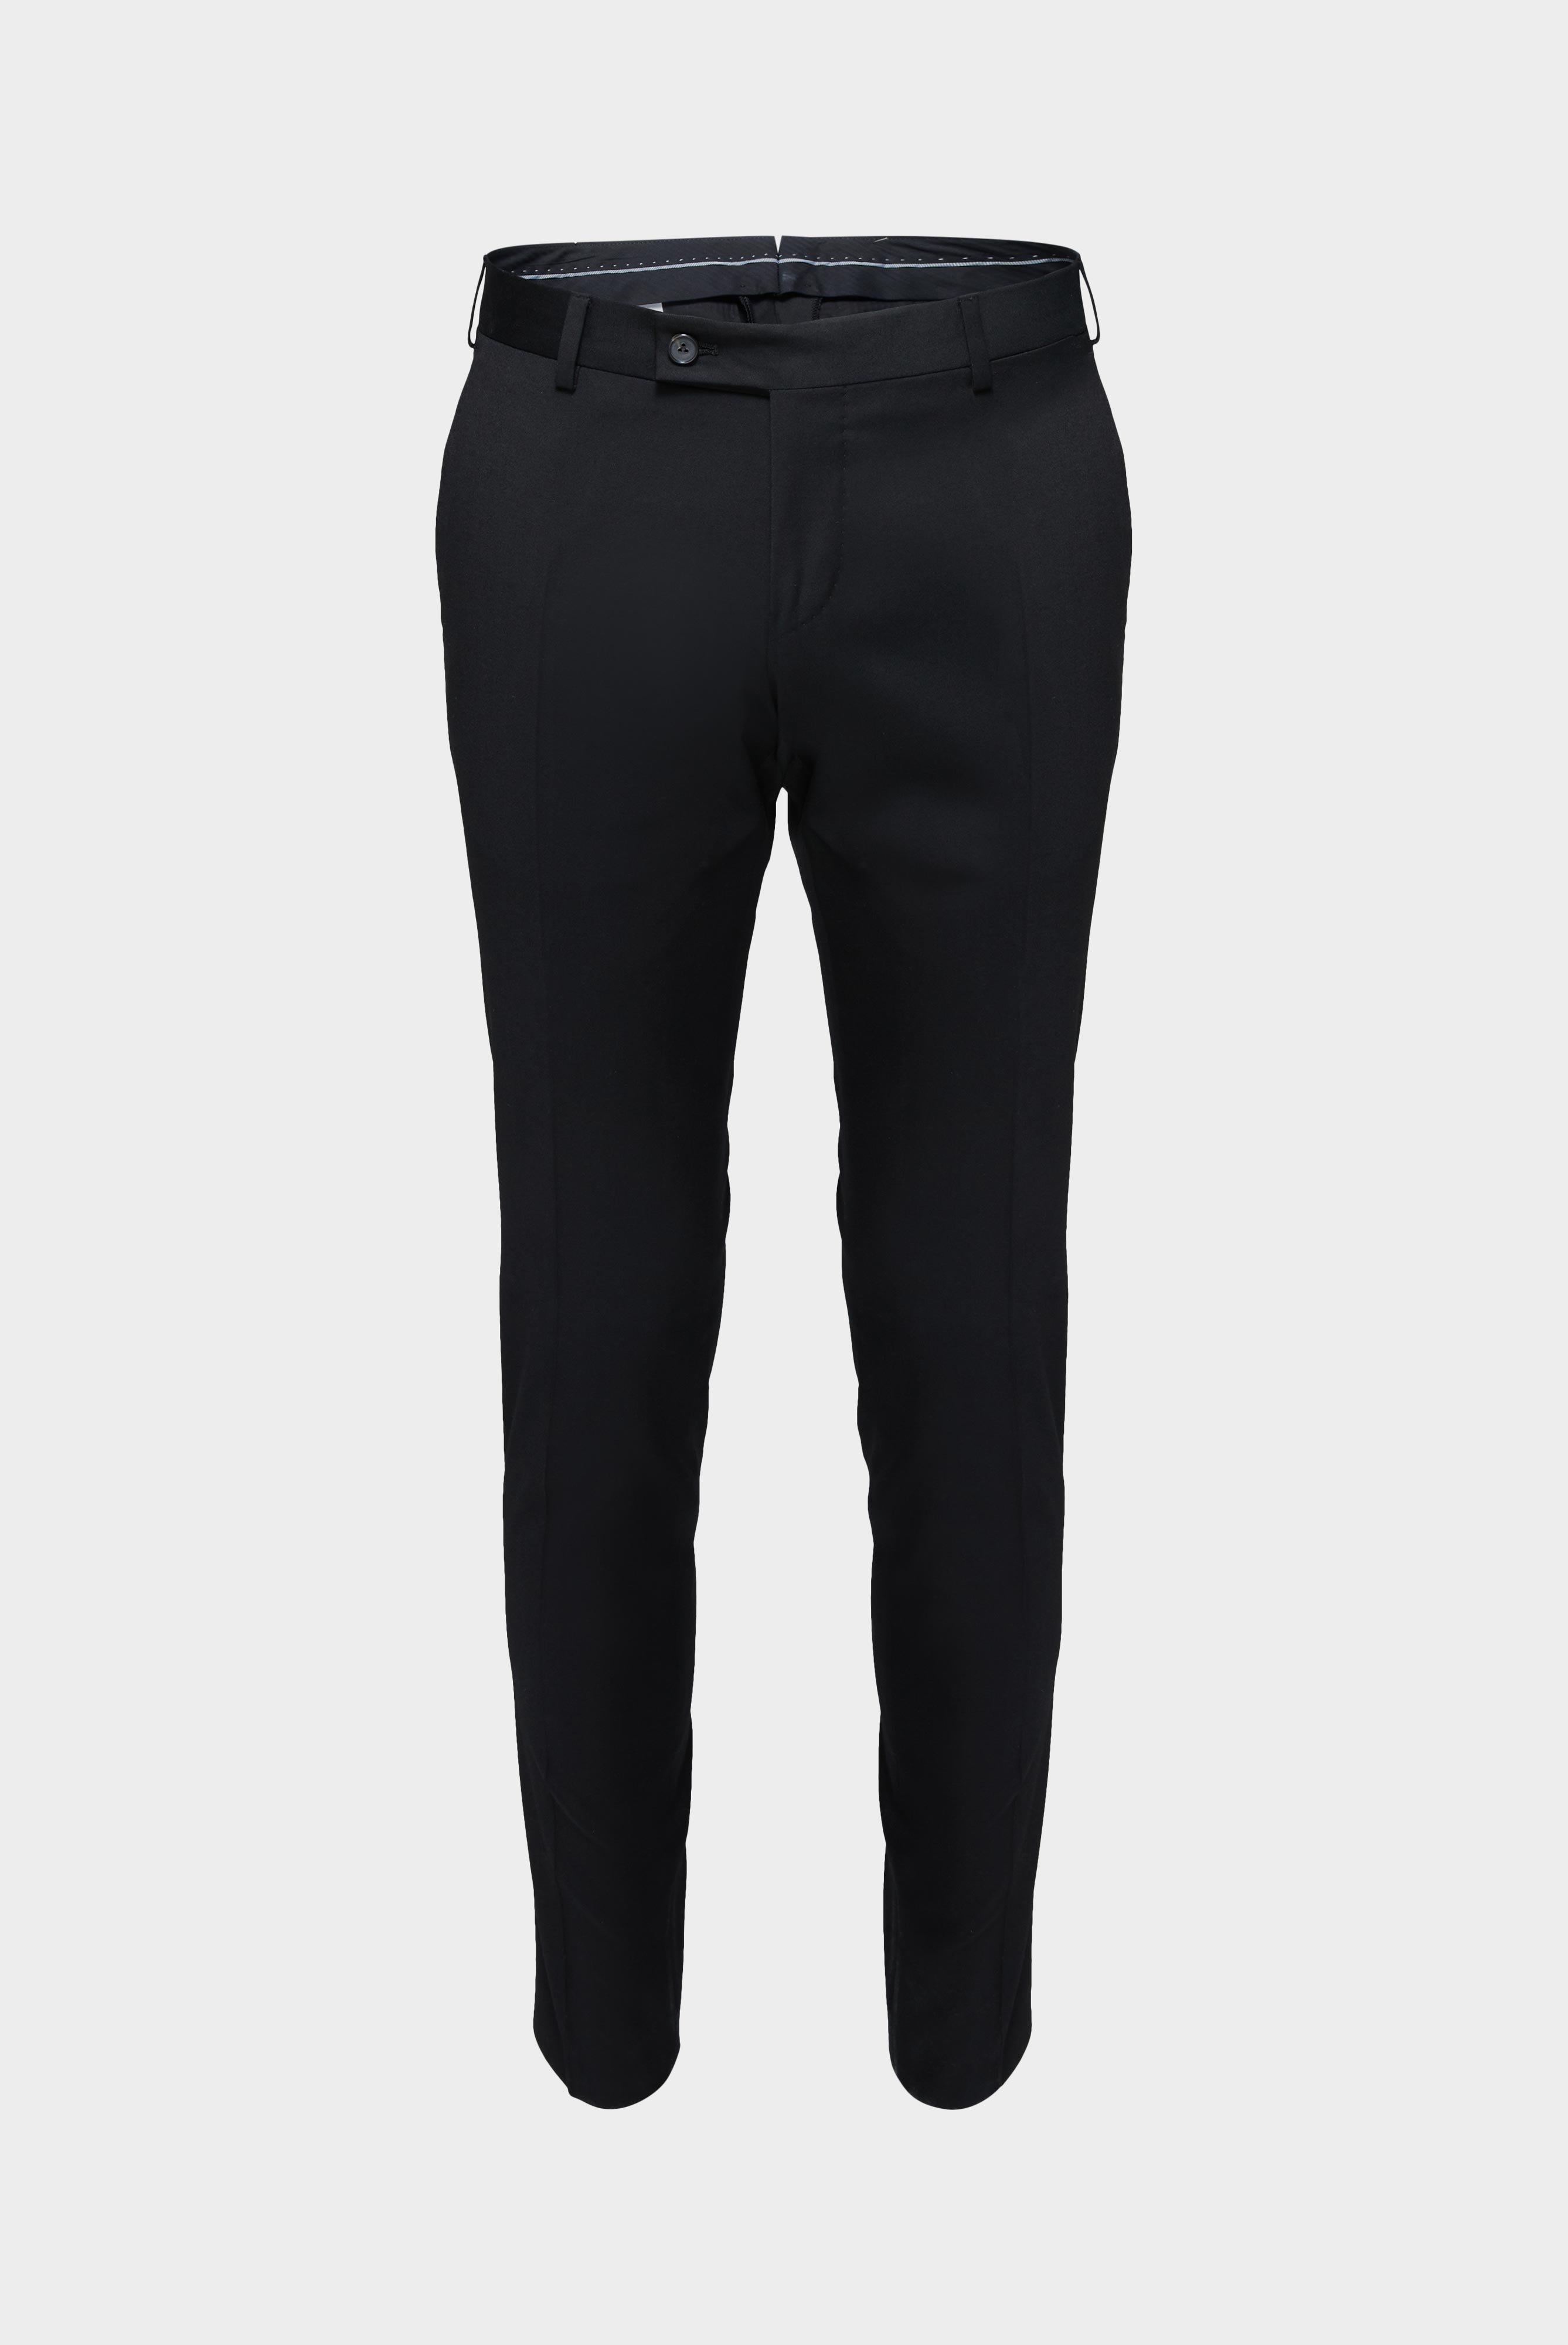 Jeans & Hosen+Hose aus Wolle Slim Fit+20.7880.16.H01010.099.23